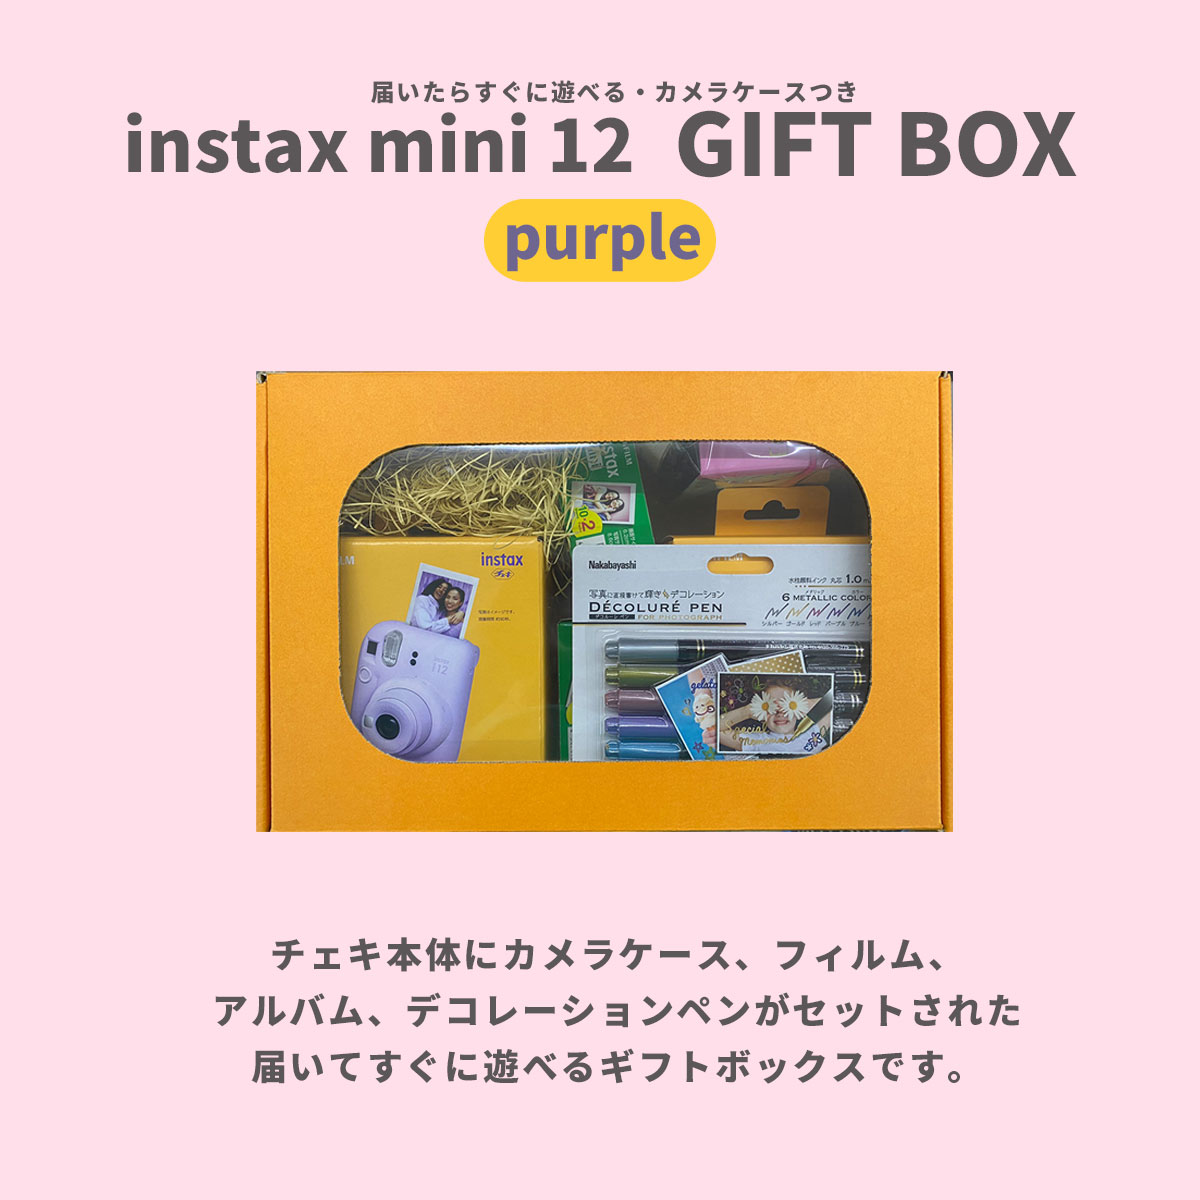 [ gift Cheki ] Fuji film Cheki instant camera instax mini 12[ lilac purple ] camera case attaching gift BOX set 